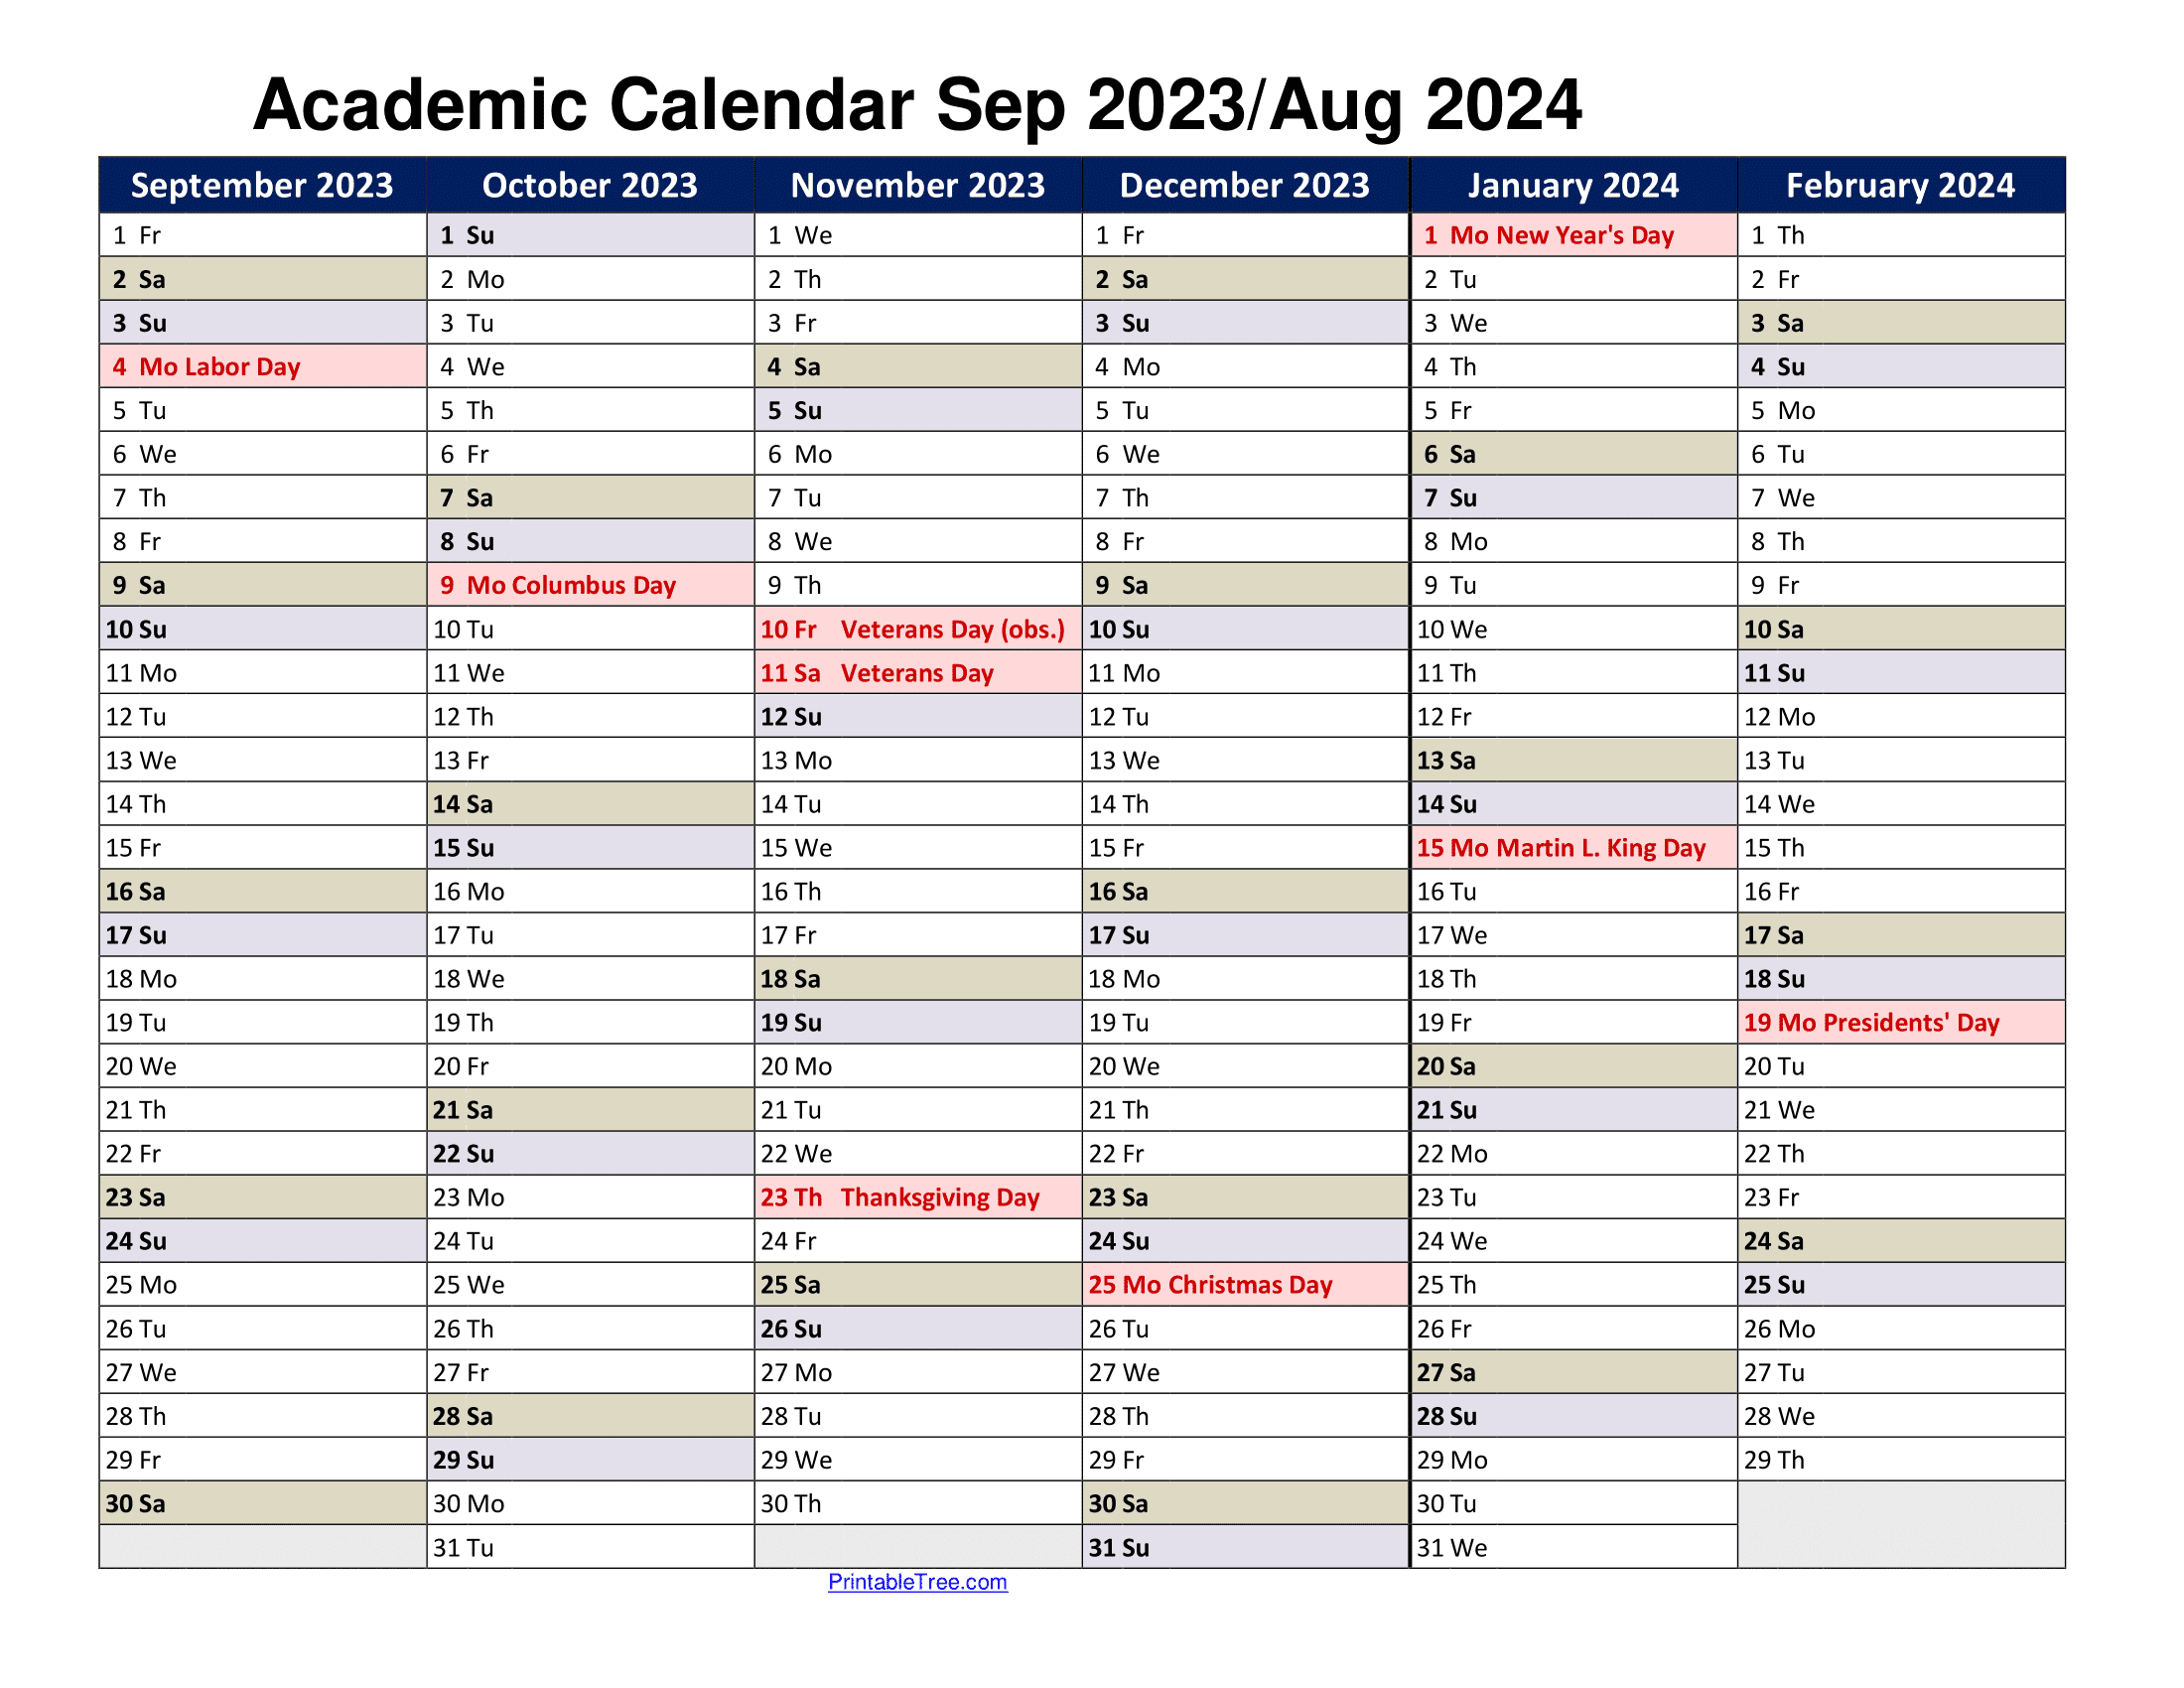 Free Printable Academic Calendar 2023 To 2024 Templates | Free Printable Academic Calendar 2023 2024